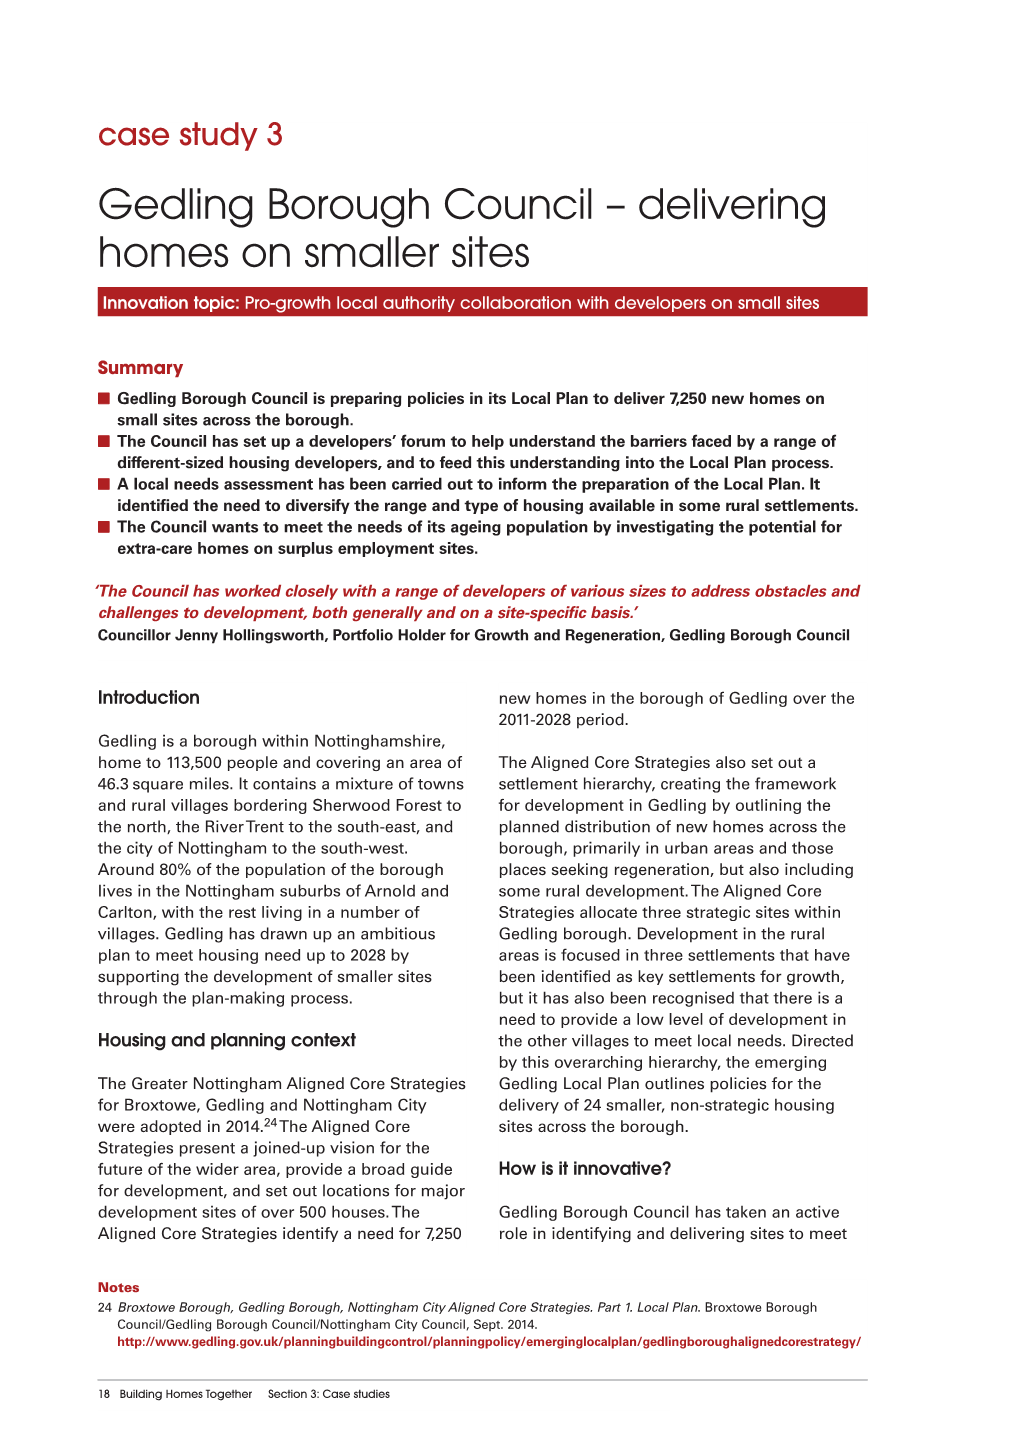 Gedling Borough Council – Delivering Homes on Smaller Sites